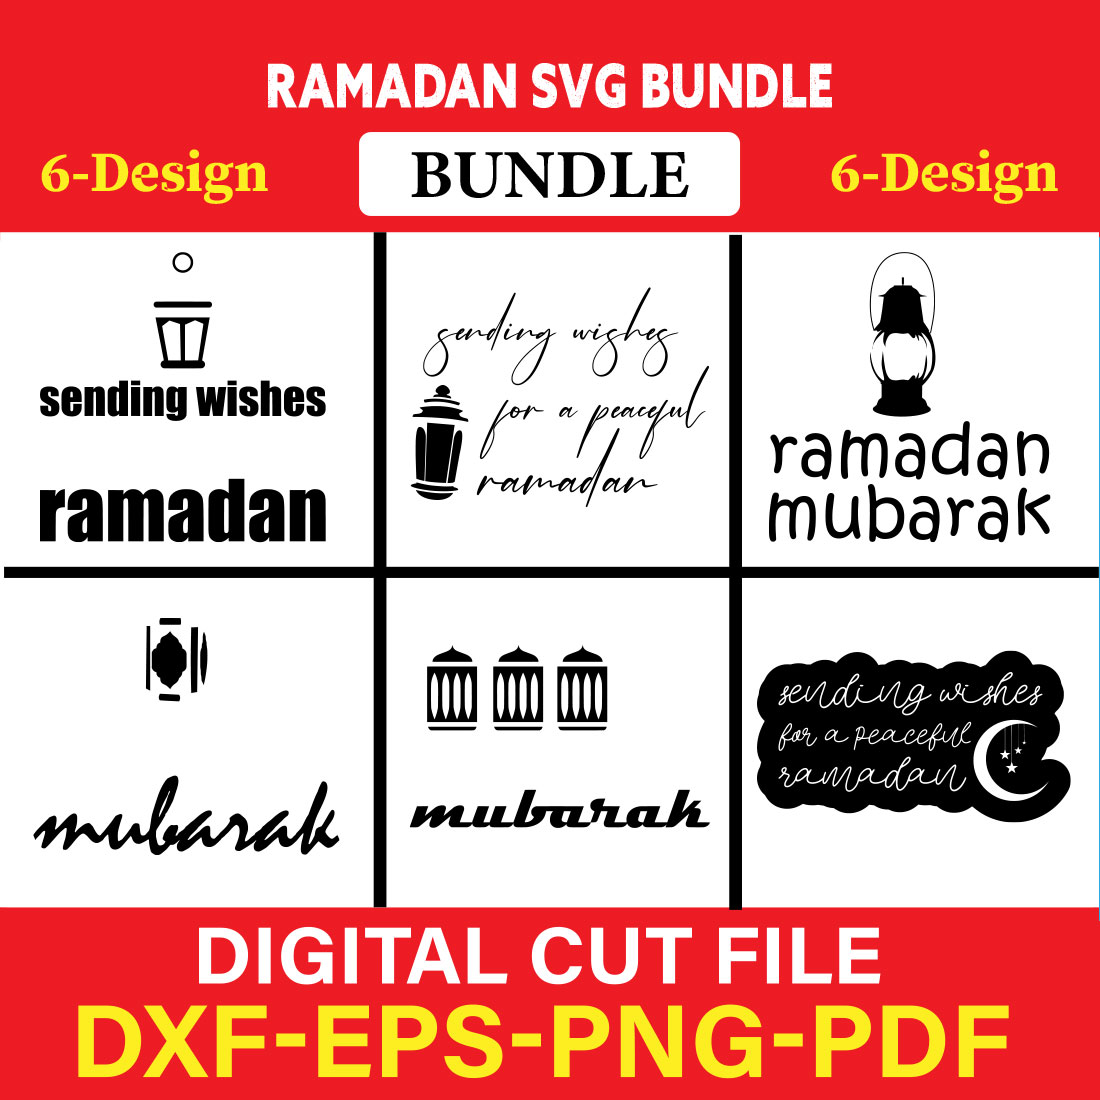 Ramadan T-shirt Design Bundle Vol-1 cover image.